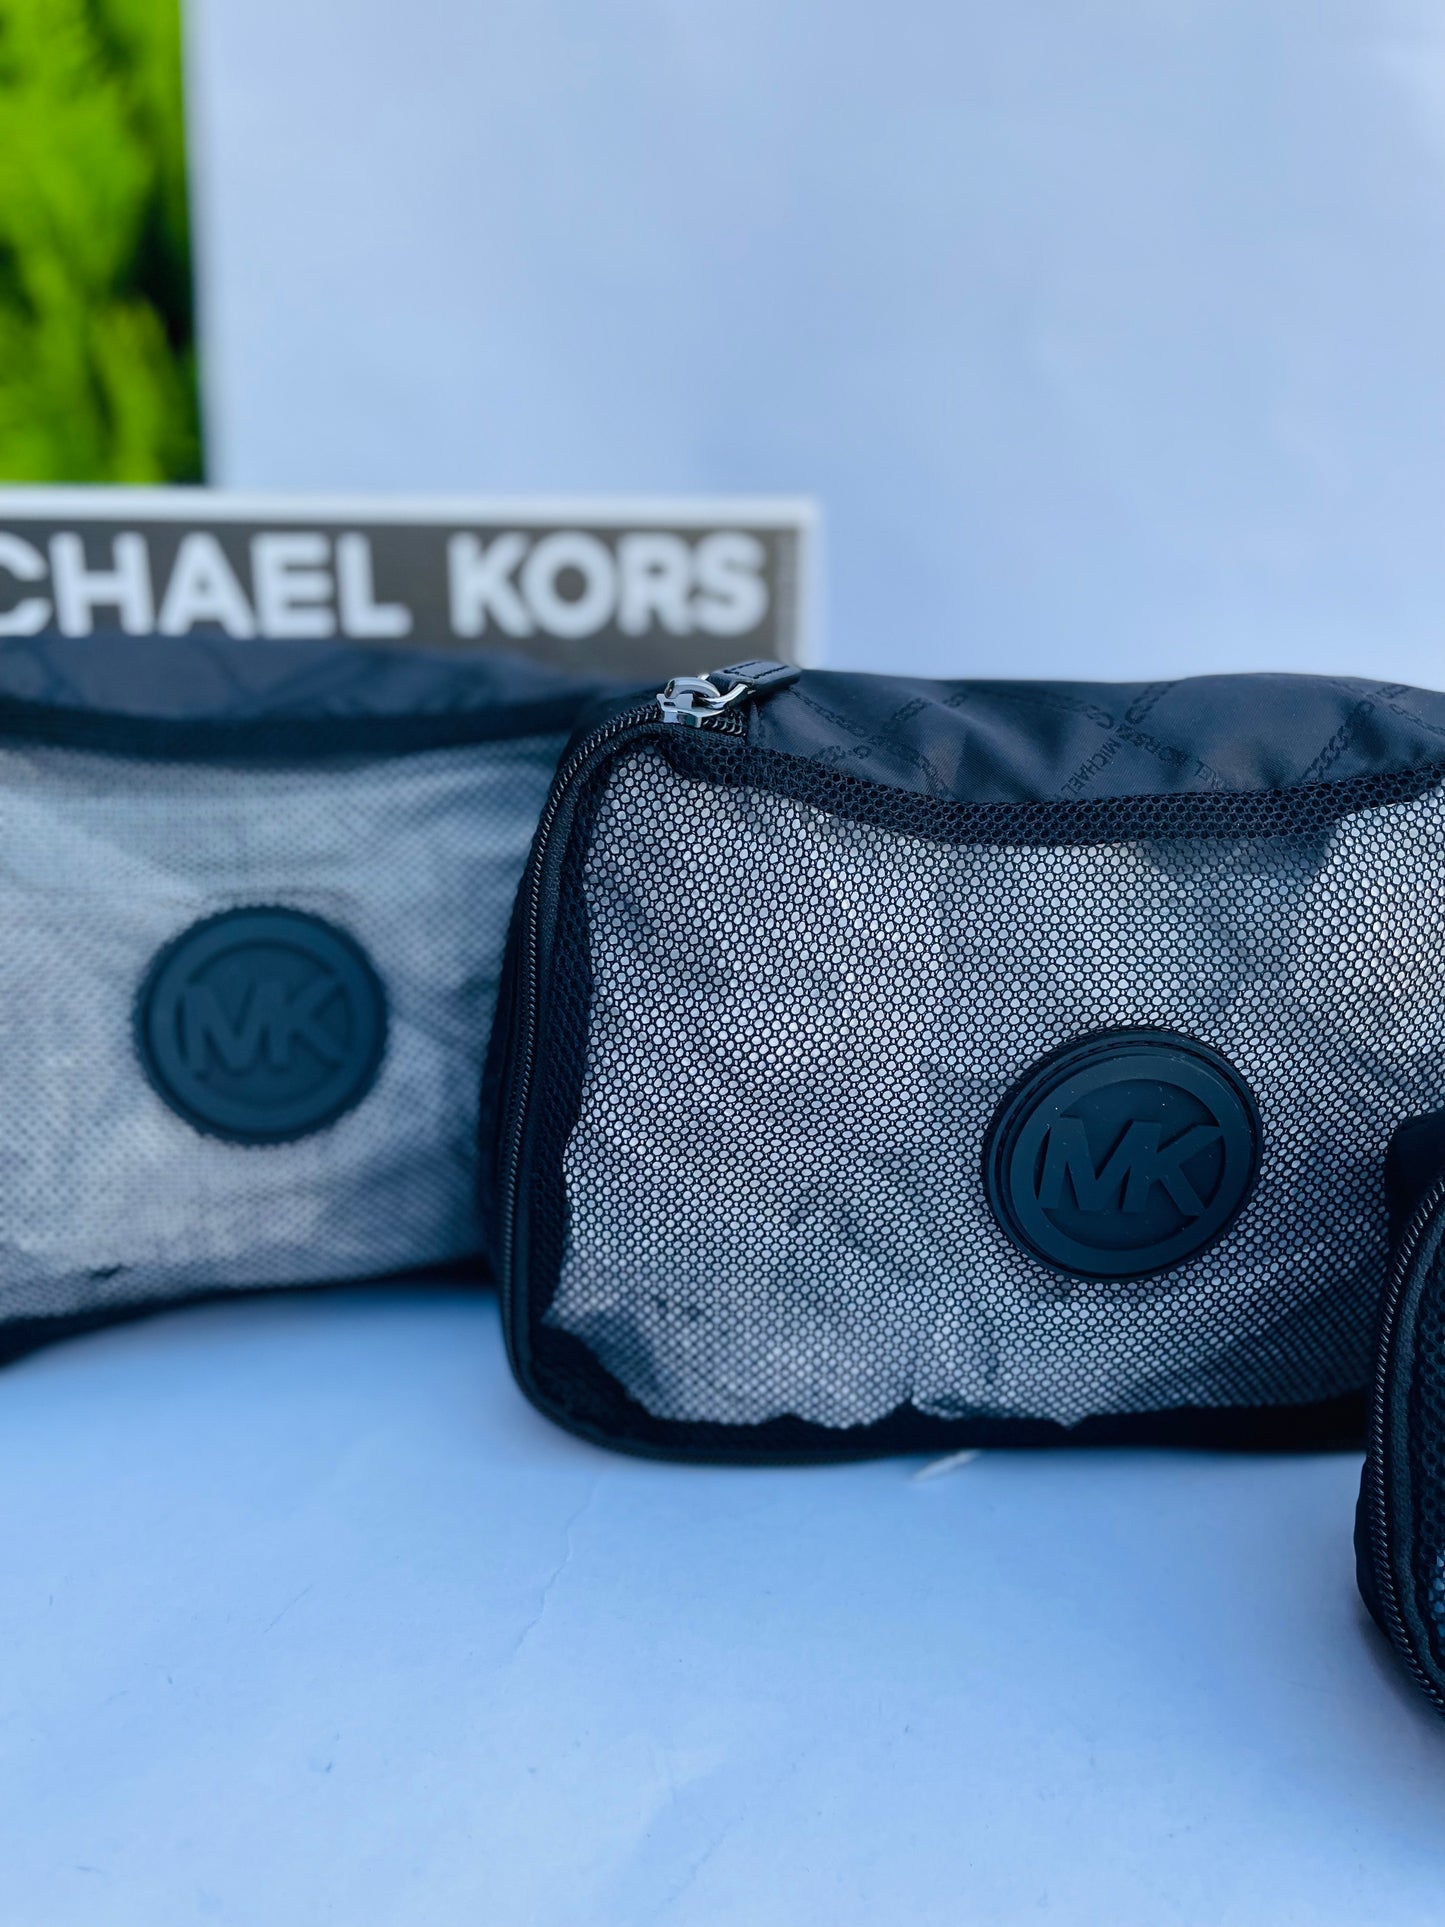 Michael kors travel bag set